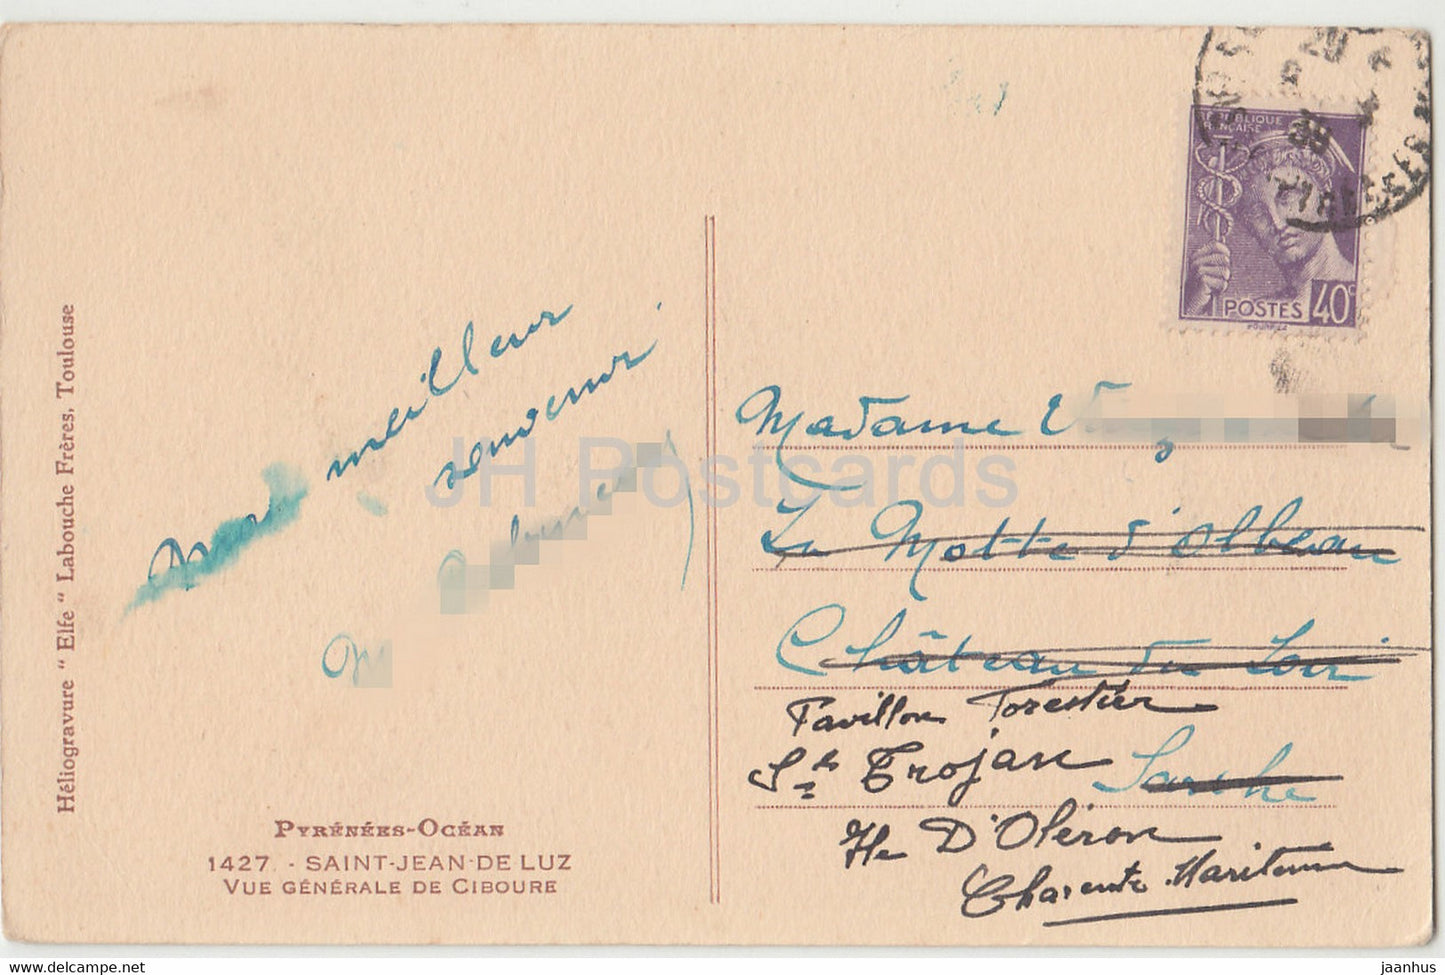 Saint Jean de Luz - Vue Generale de Ciboure - Boot - Schiff - 1427 - alte Postkarte - 1938 - Frankreich - gebraucht